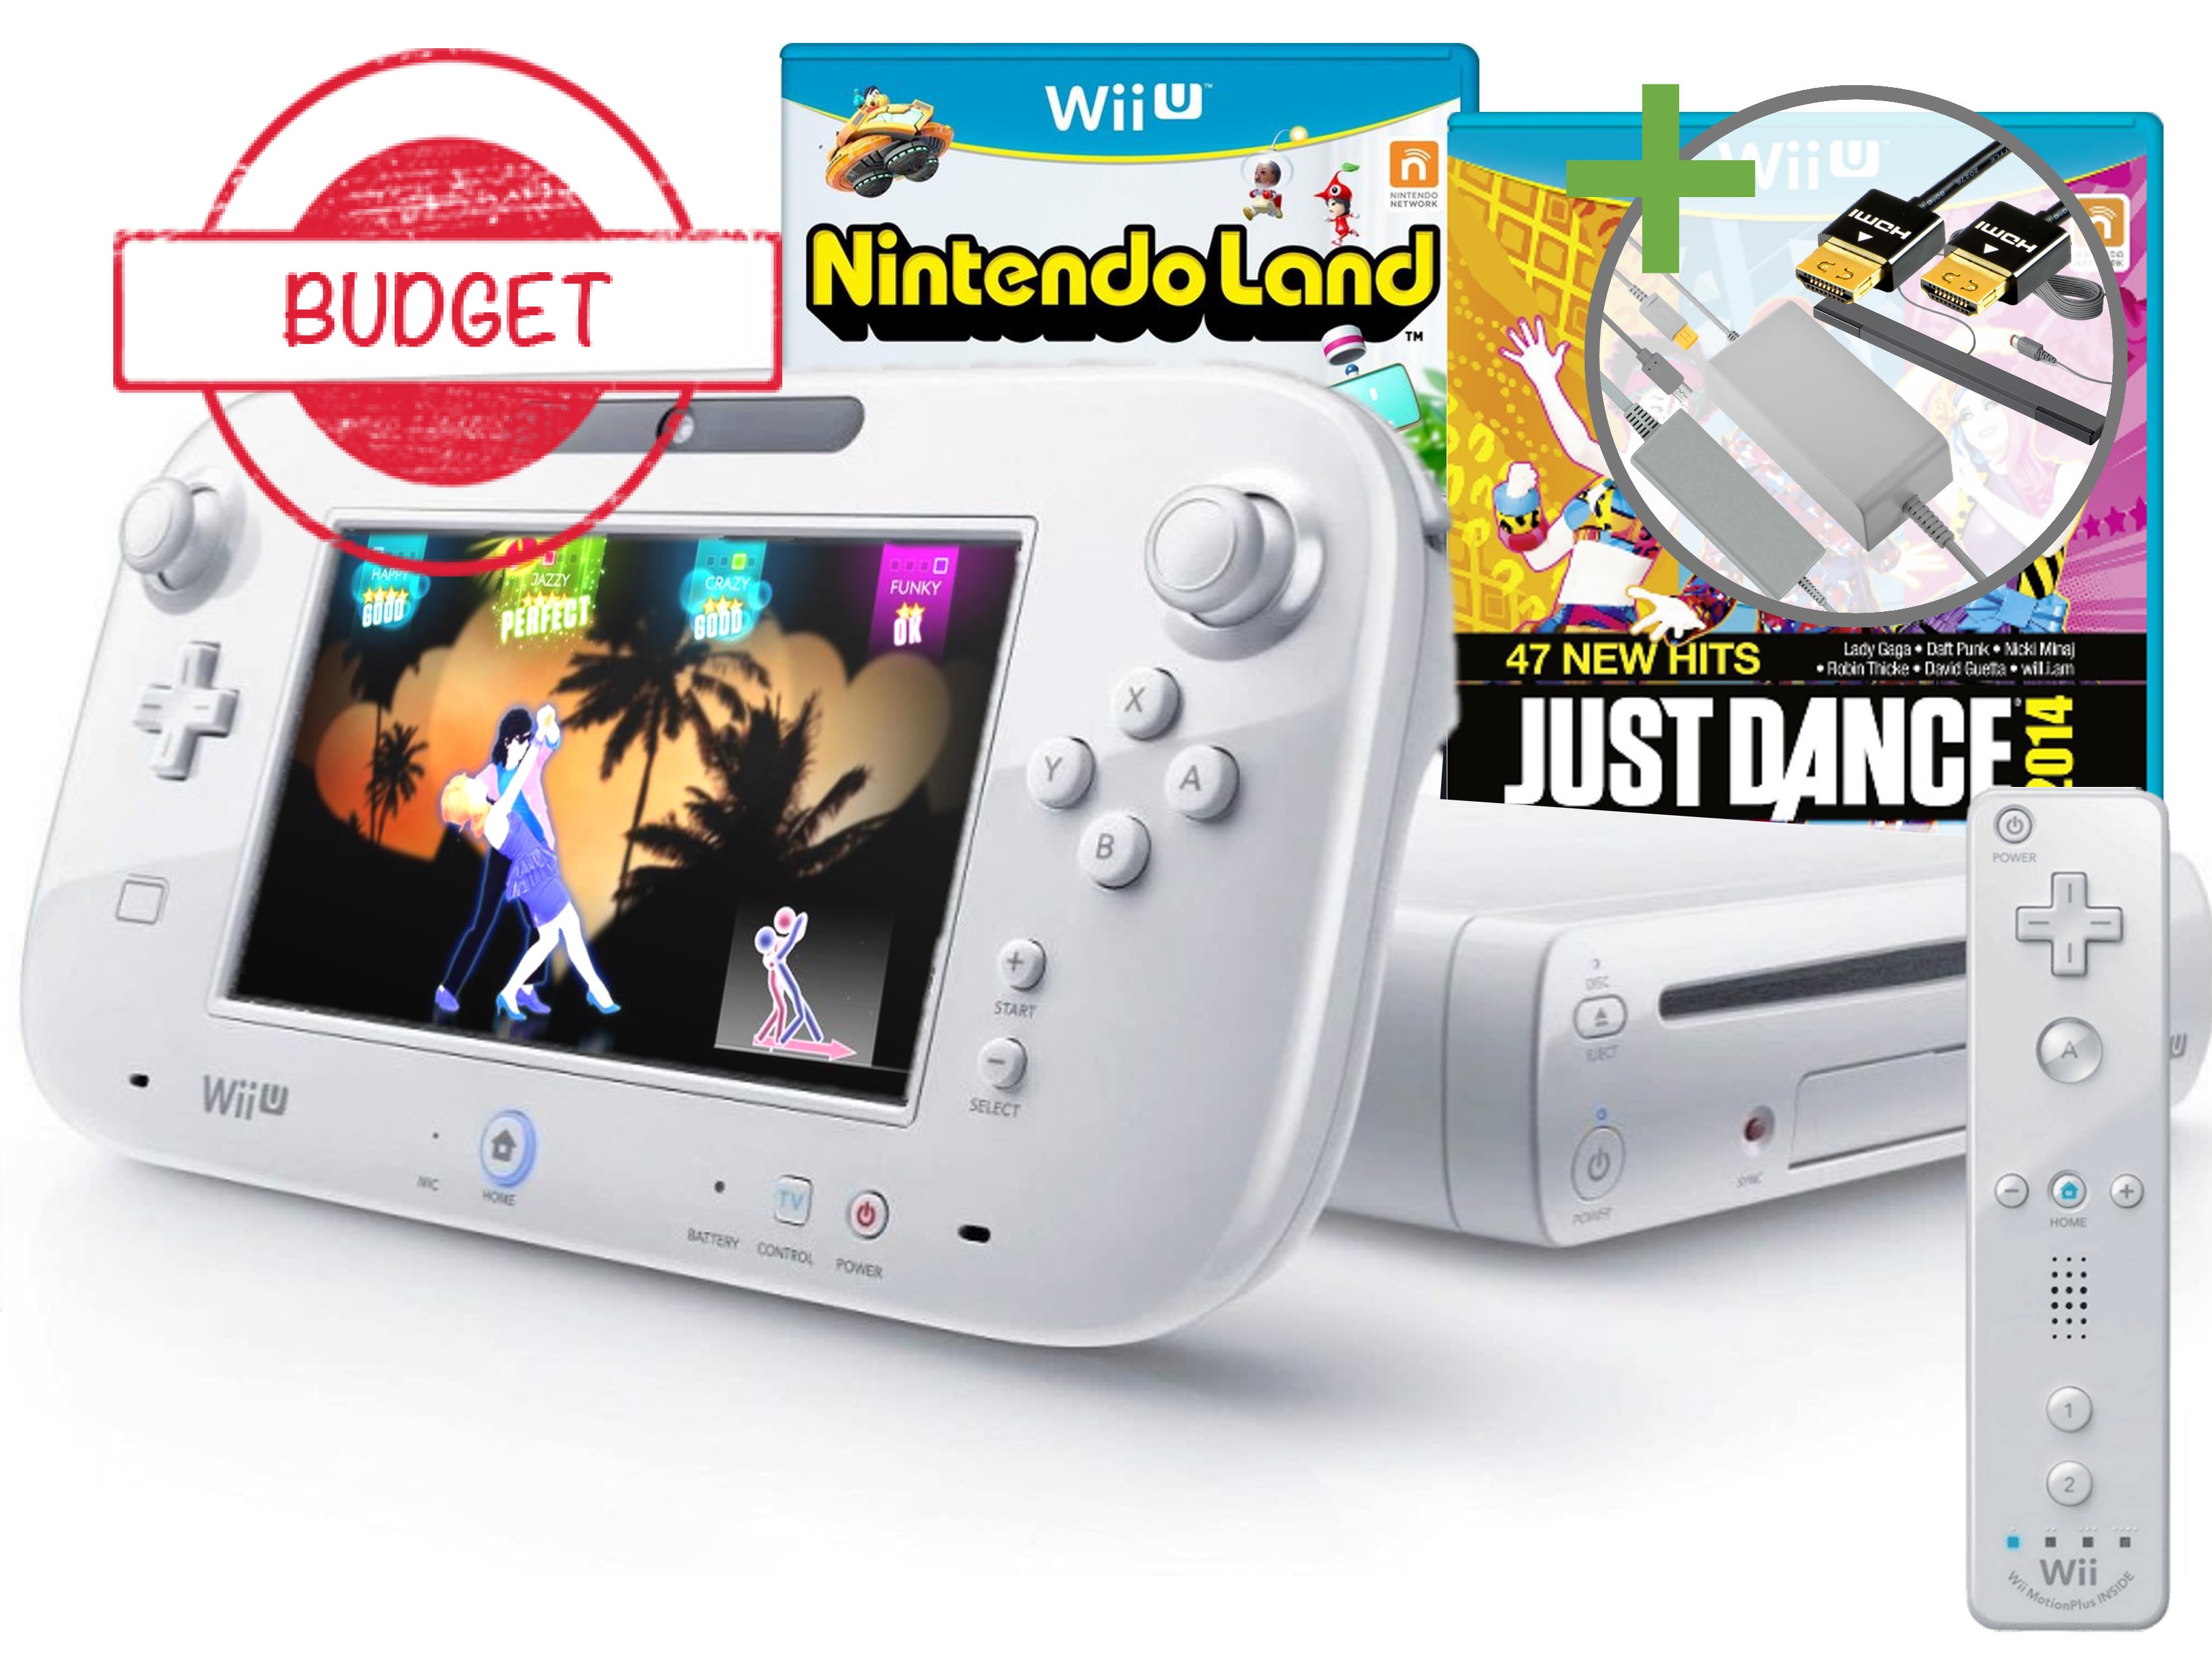 Nintendo Wii U Starter Pack - Just Dance 2014 Edition - Budget Kopen | Wii U Hardware